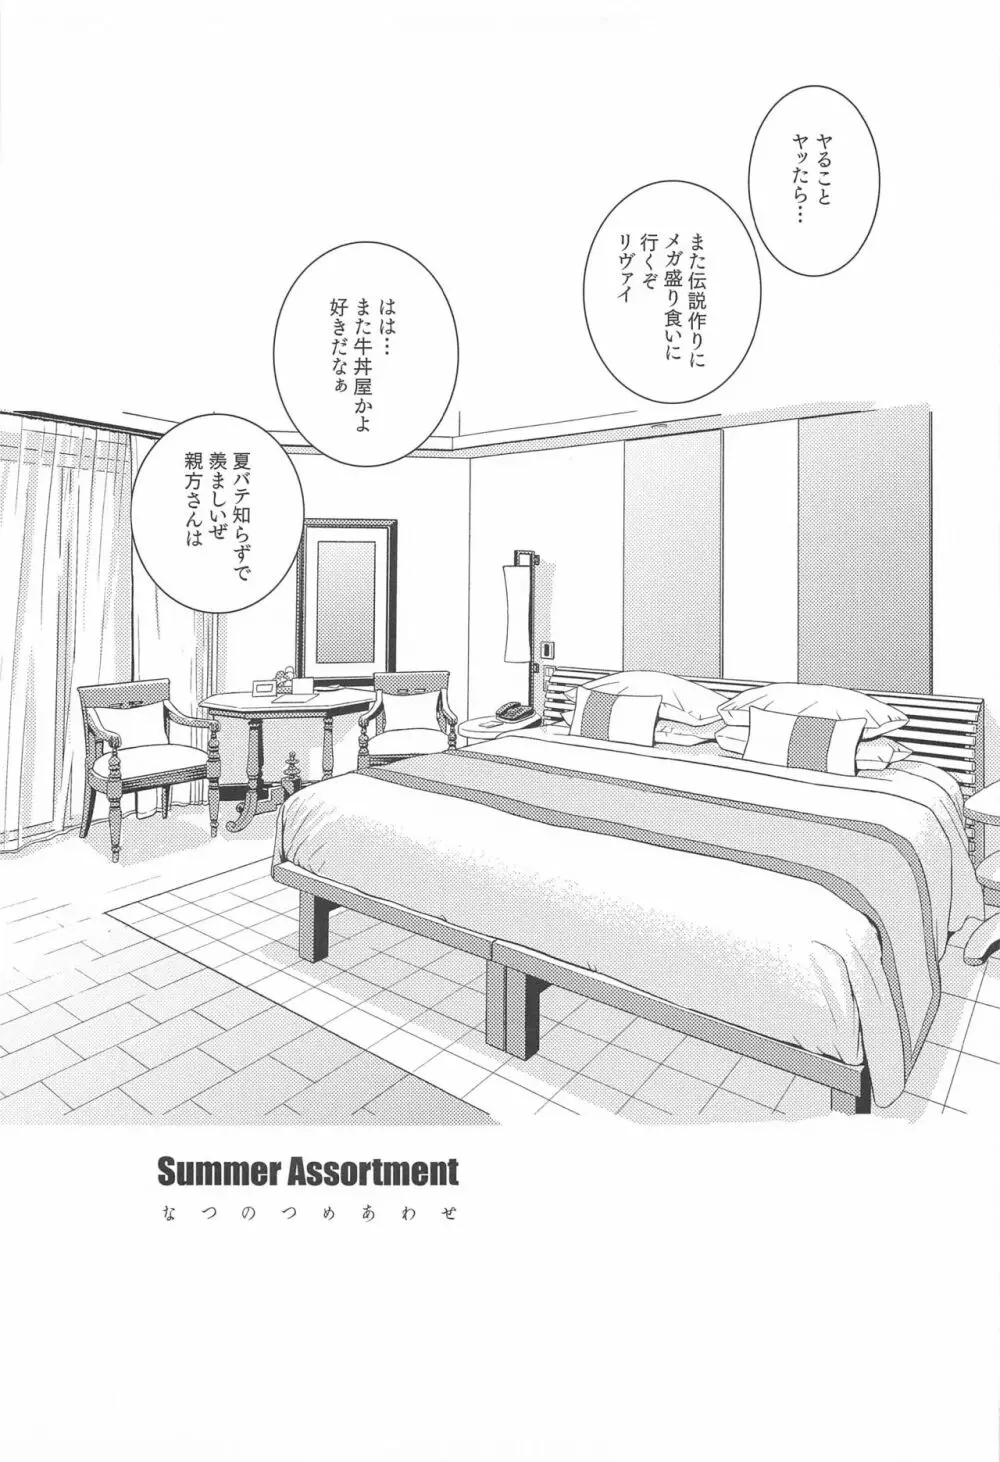 Summer Assortment Remake - page28